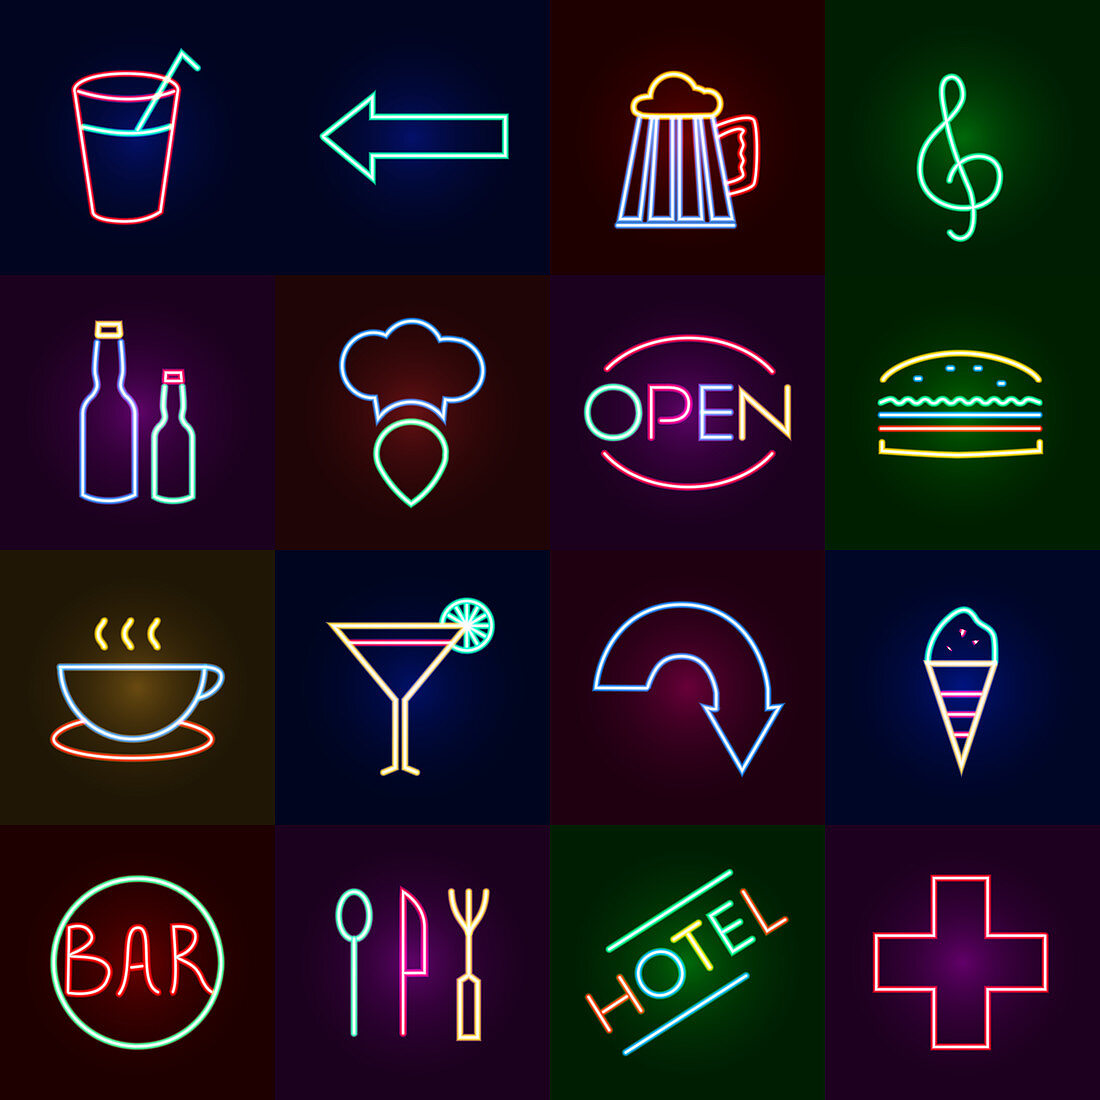 Neon sign icons, illustration